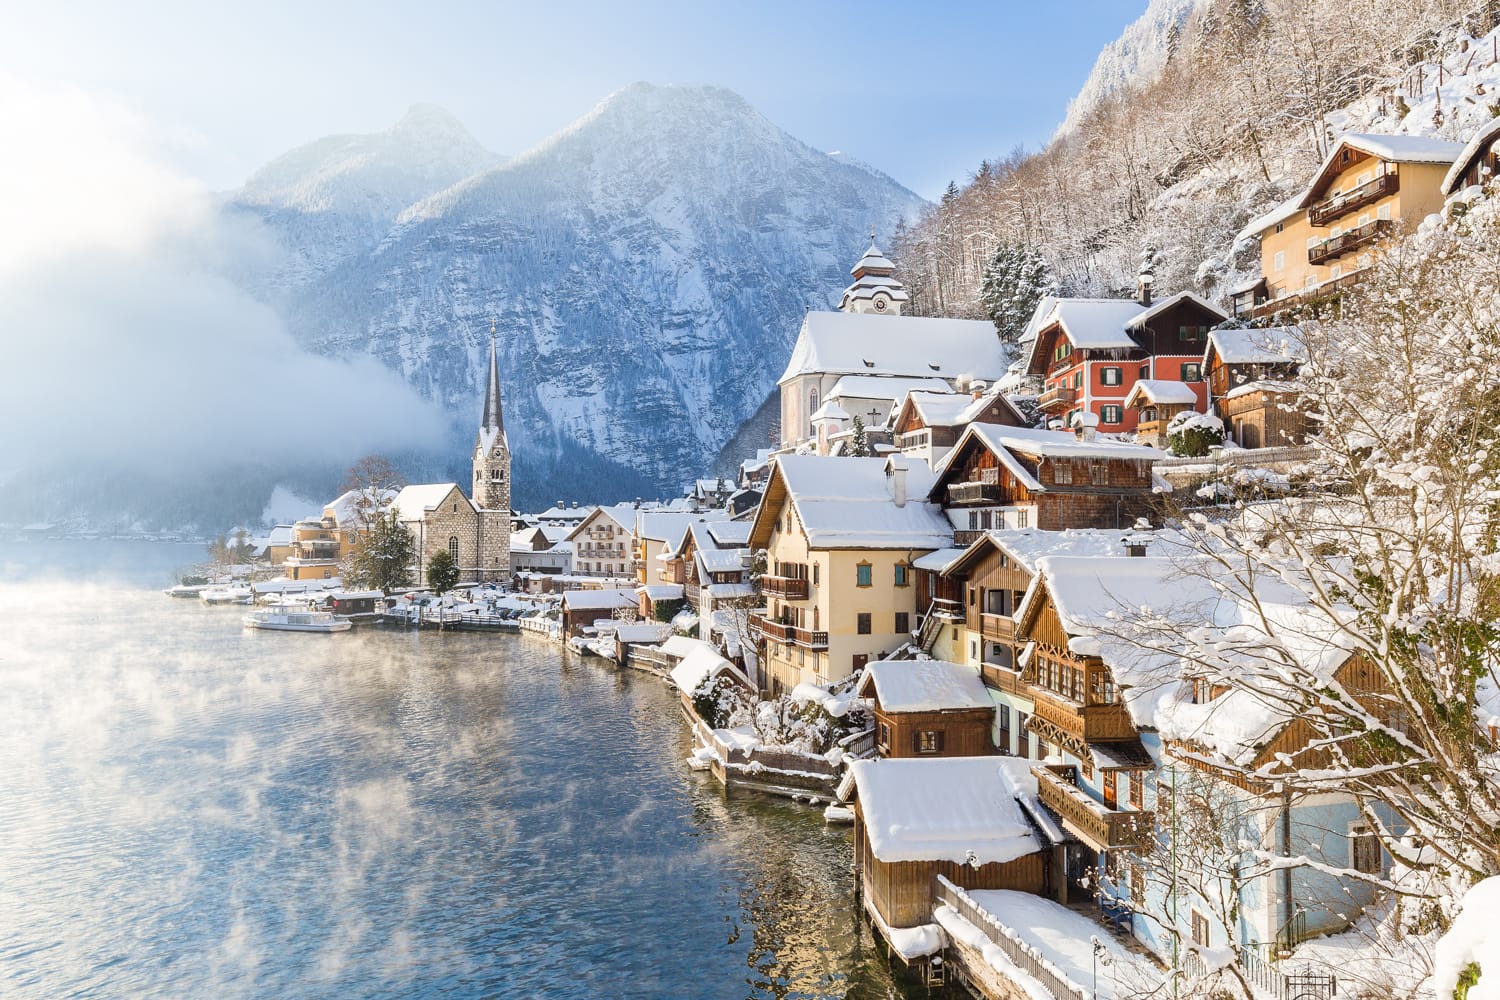 15 Best Places in Europe in Winter 2022 - European Winter Destinations